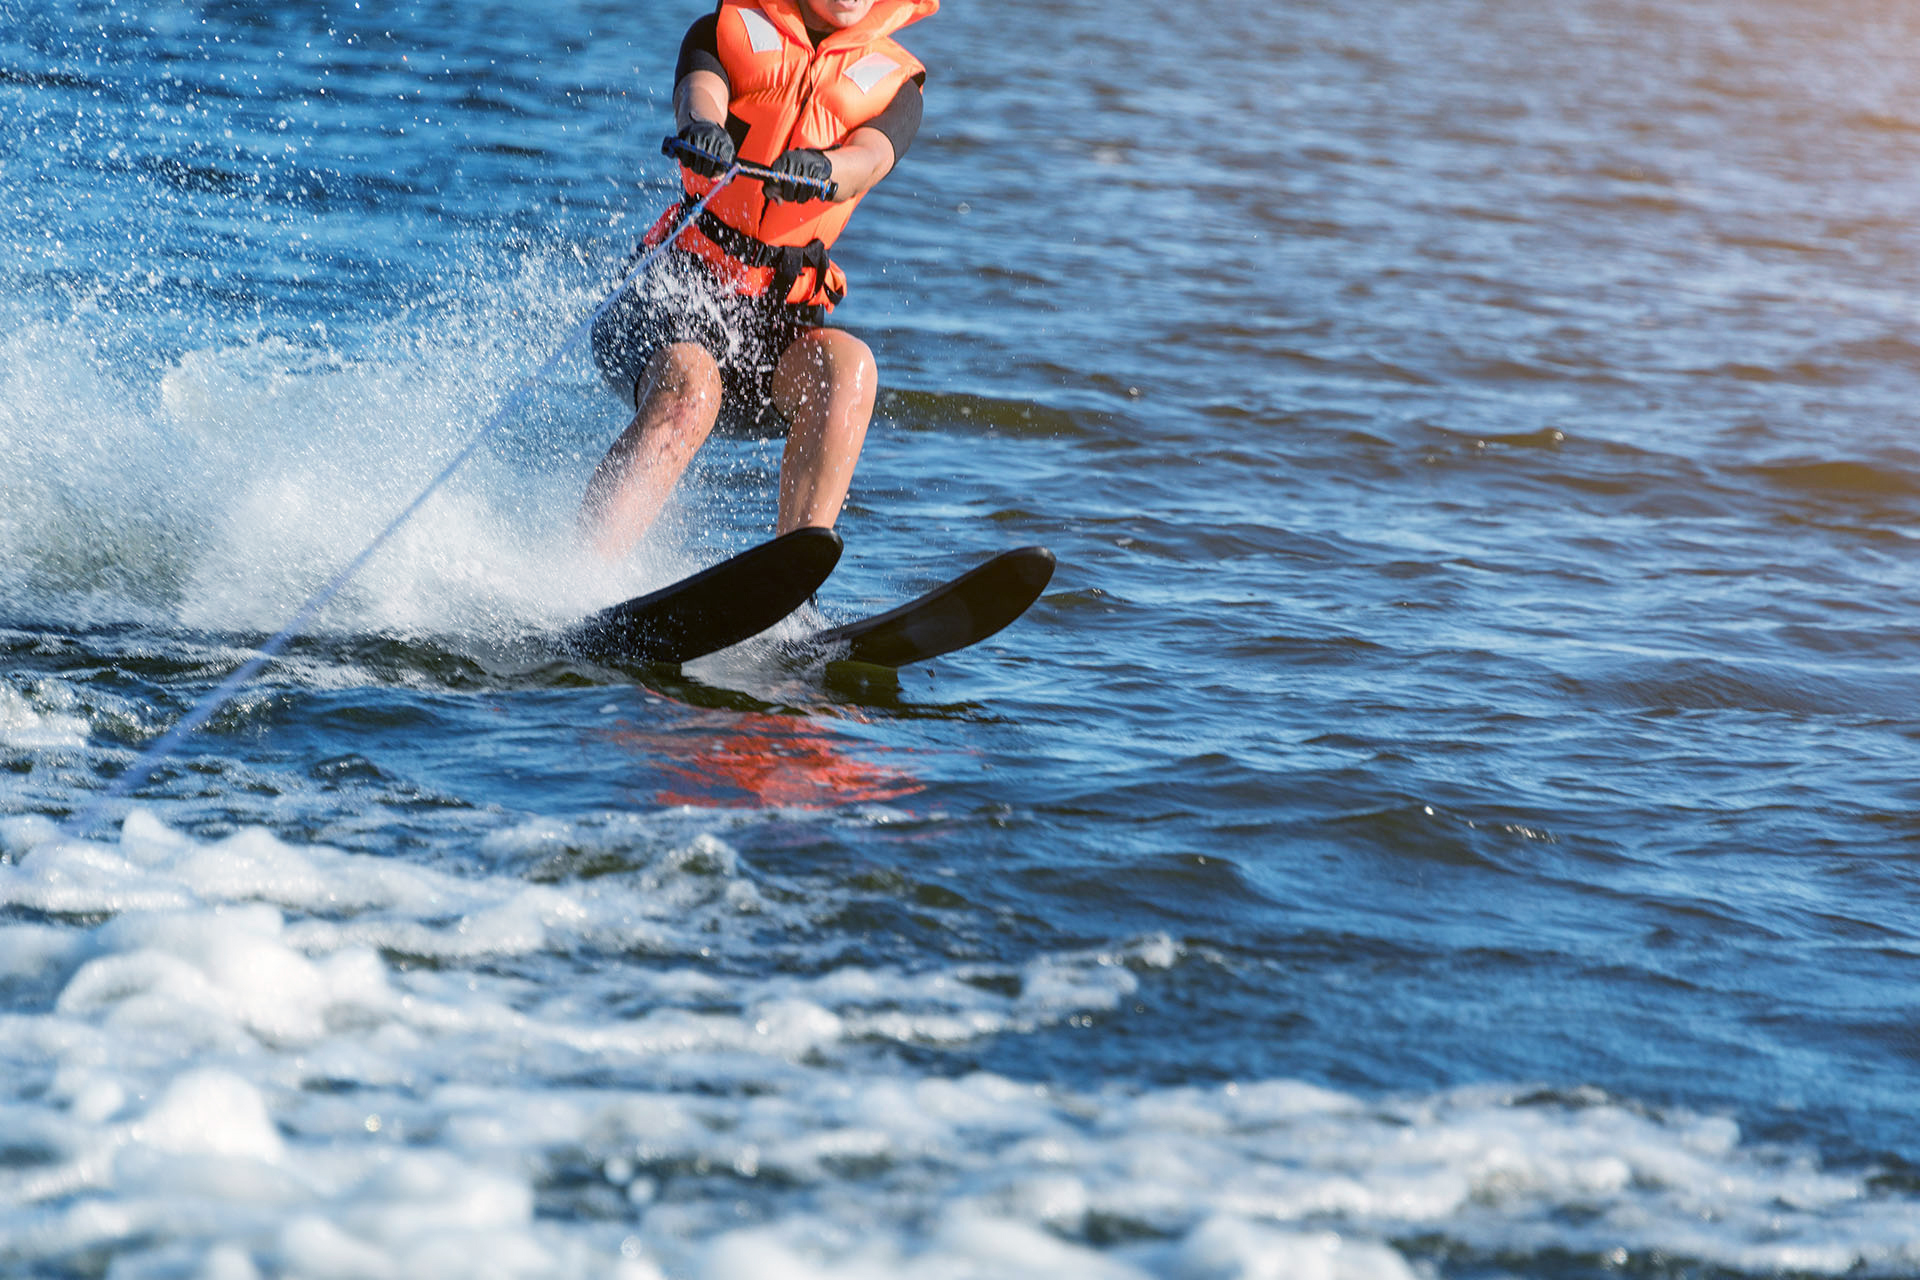 extreme water sports - water ski